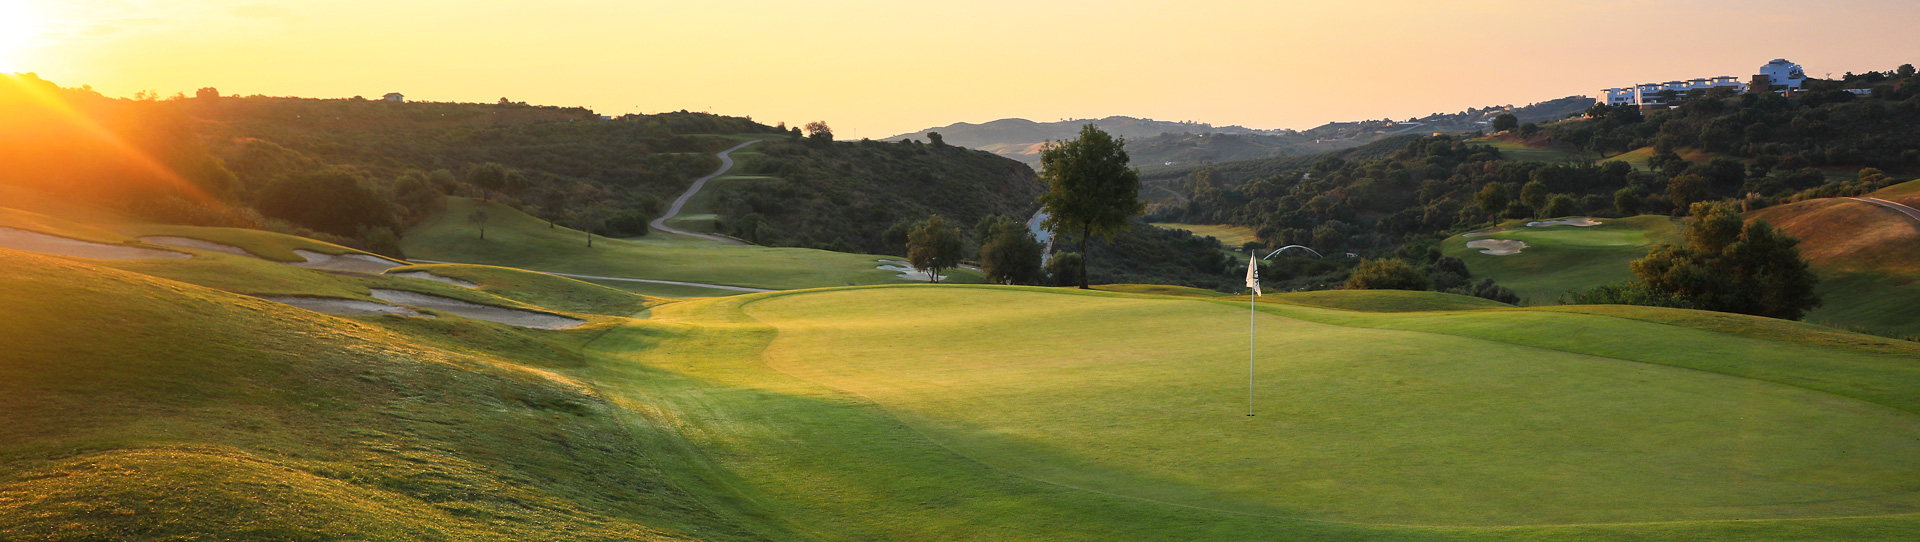 Spain golf courses - La Cala Europa - Photo 2